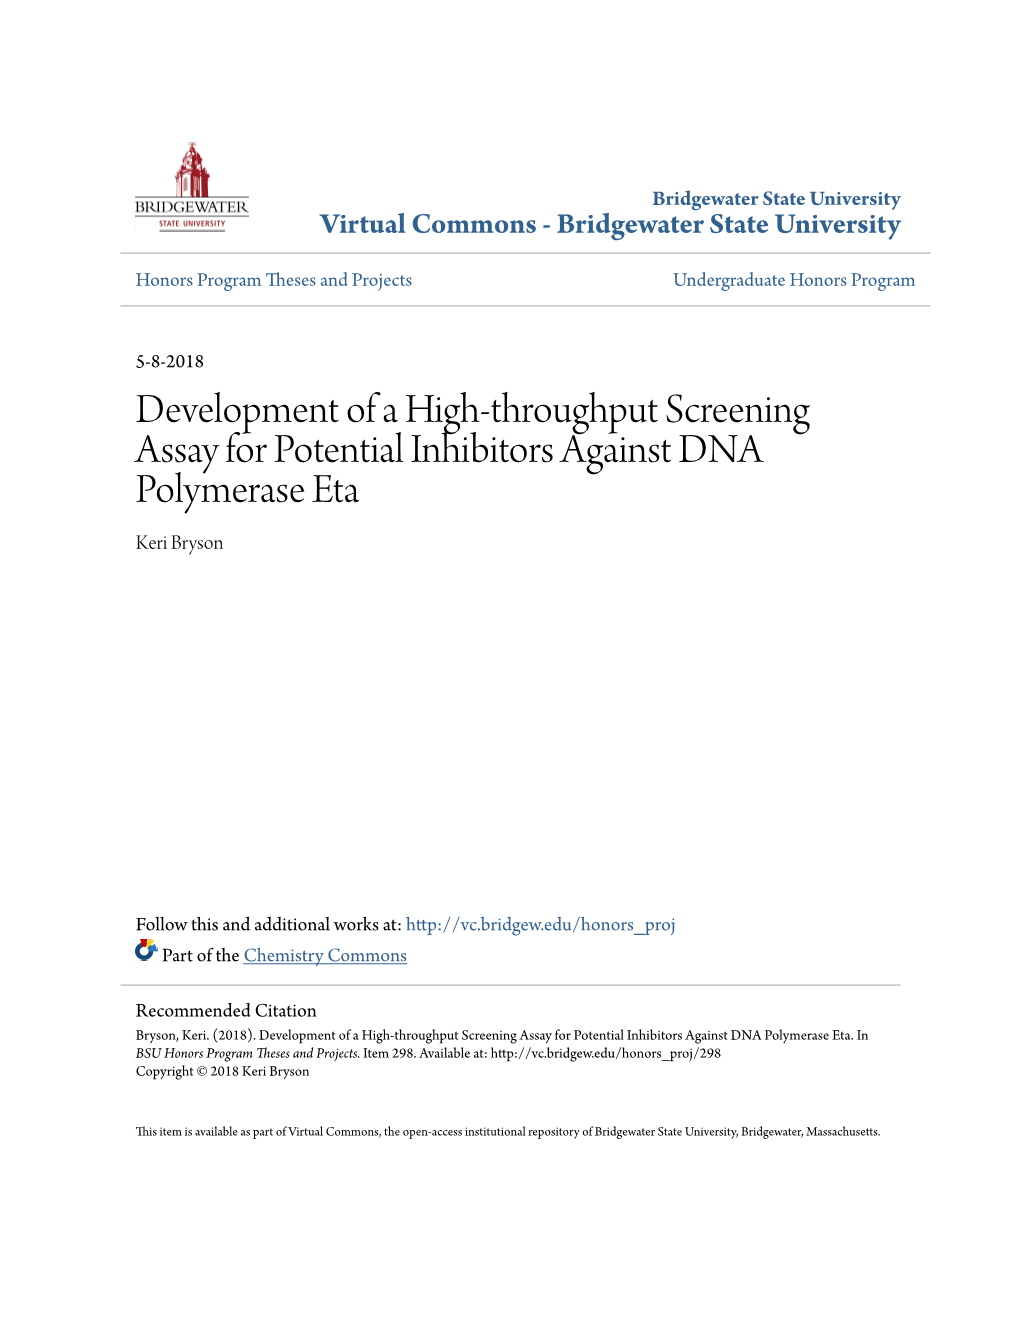 Development of a High-Throughput Screening Assay for Potential Inhibitors Against DNA Polymerase Eta Keri Bryson